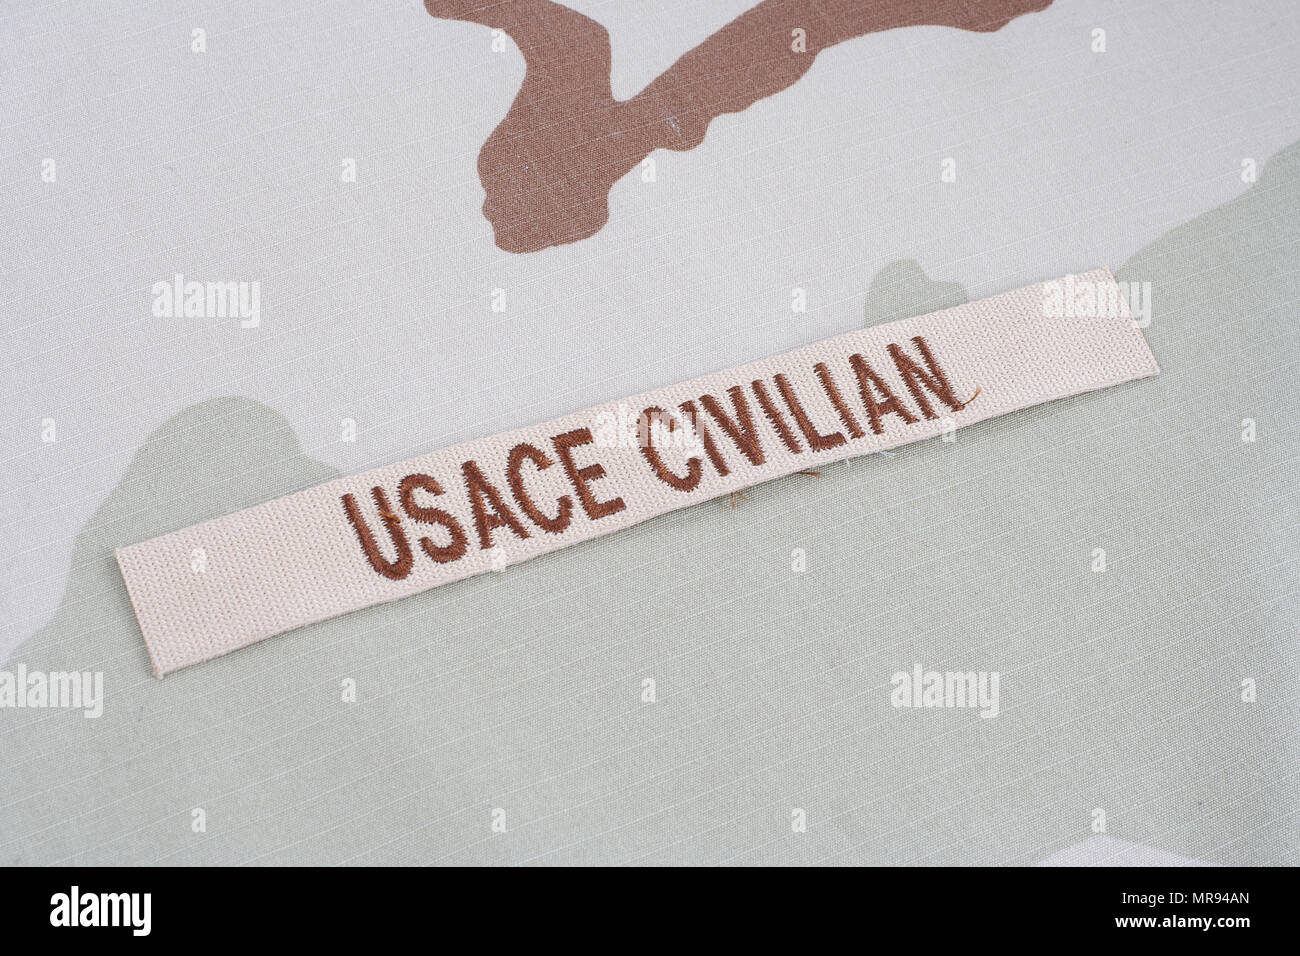 KIEV, UKRAINE - June 14, 2015. USACE CIVILAN branch tape on desert camouflage uniform Stock Photo